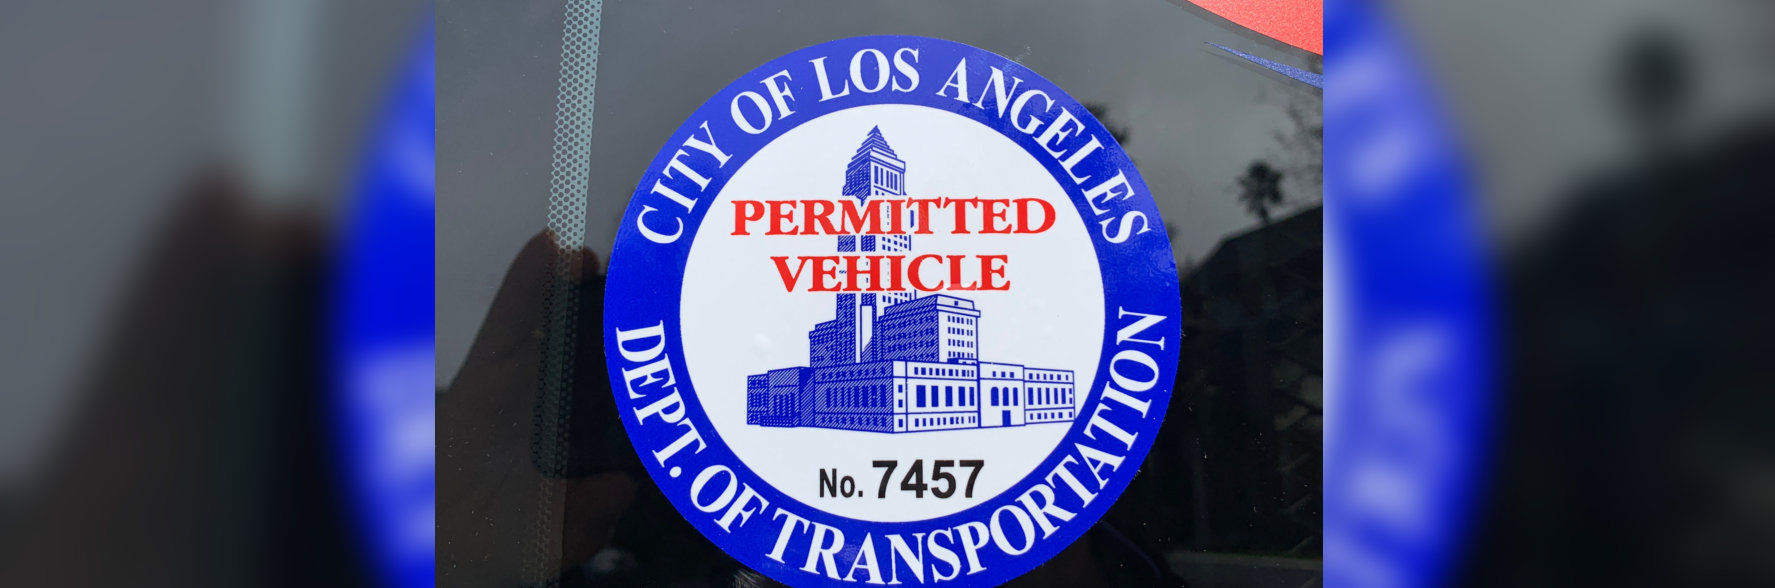 City of Los Angeles Department of Transportation logo